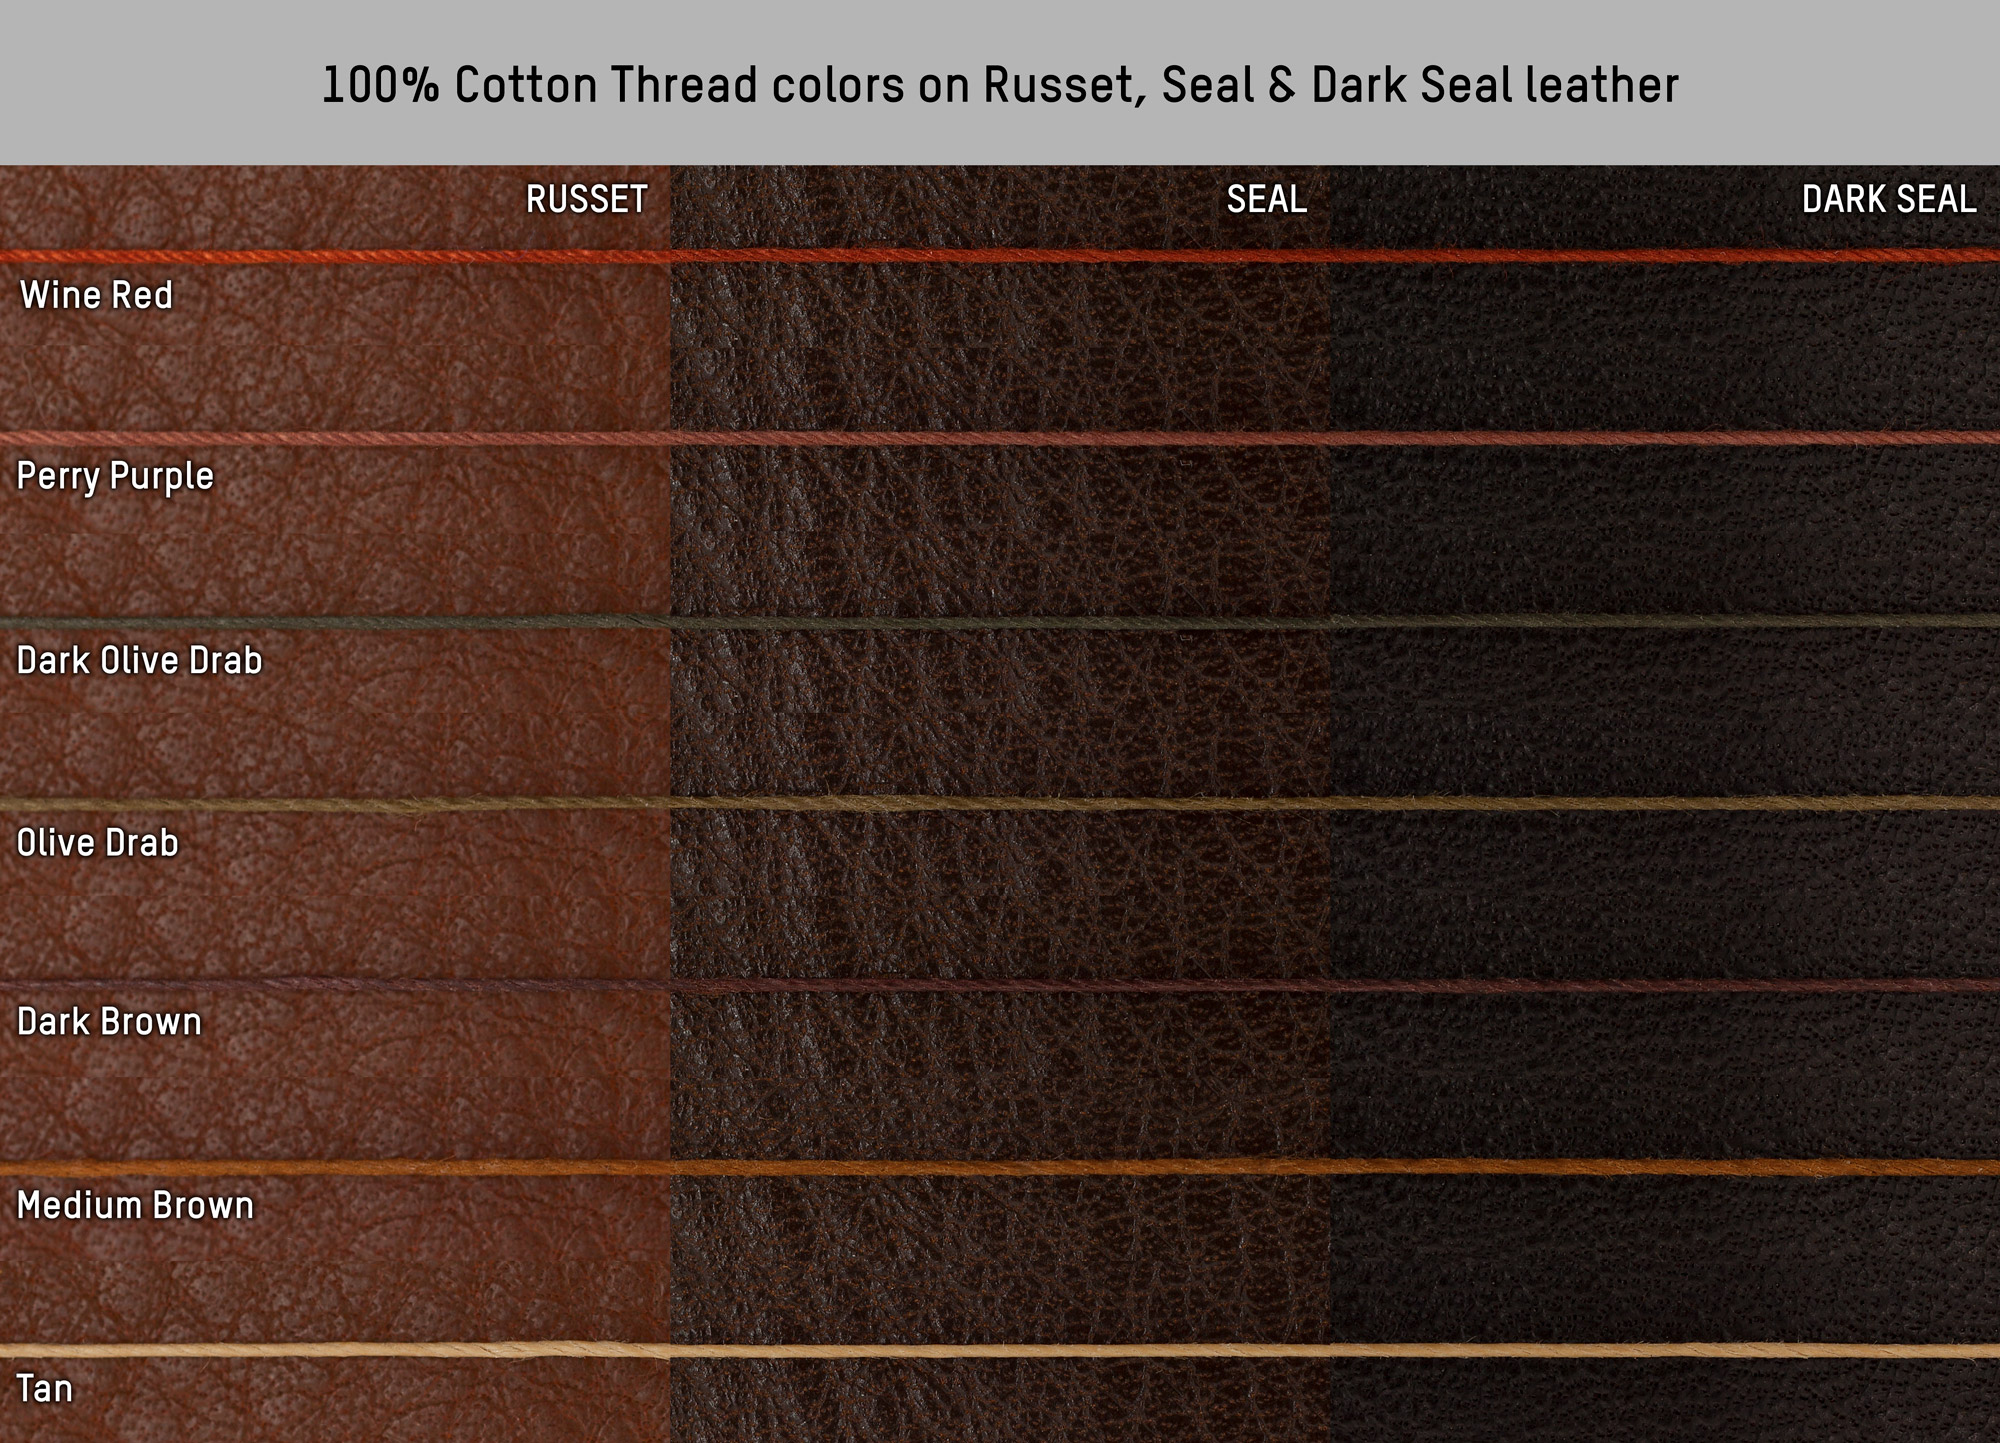 thread_100percent_cotton_thread_colors.jpg